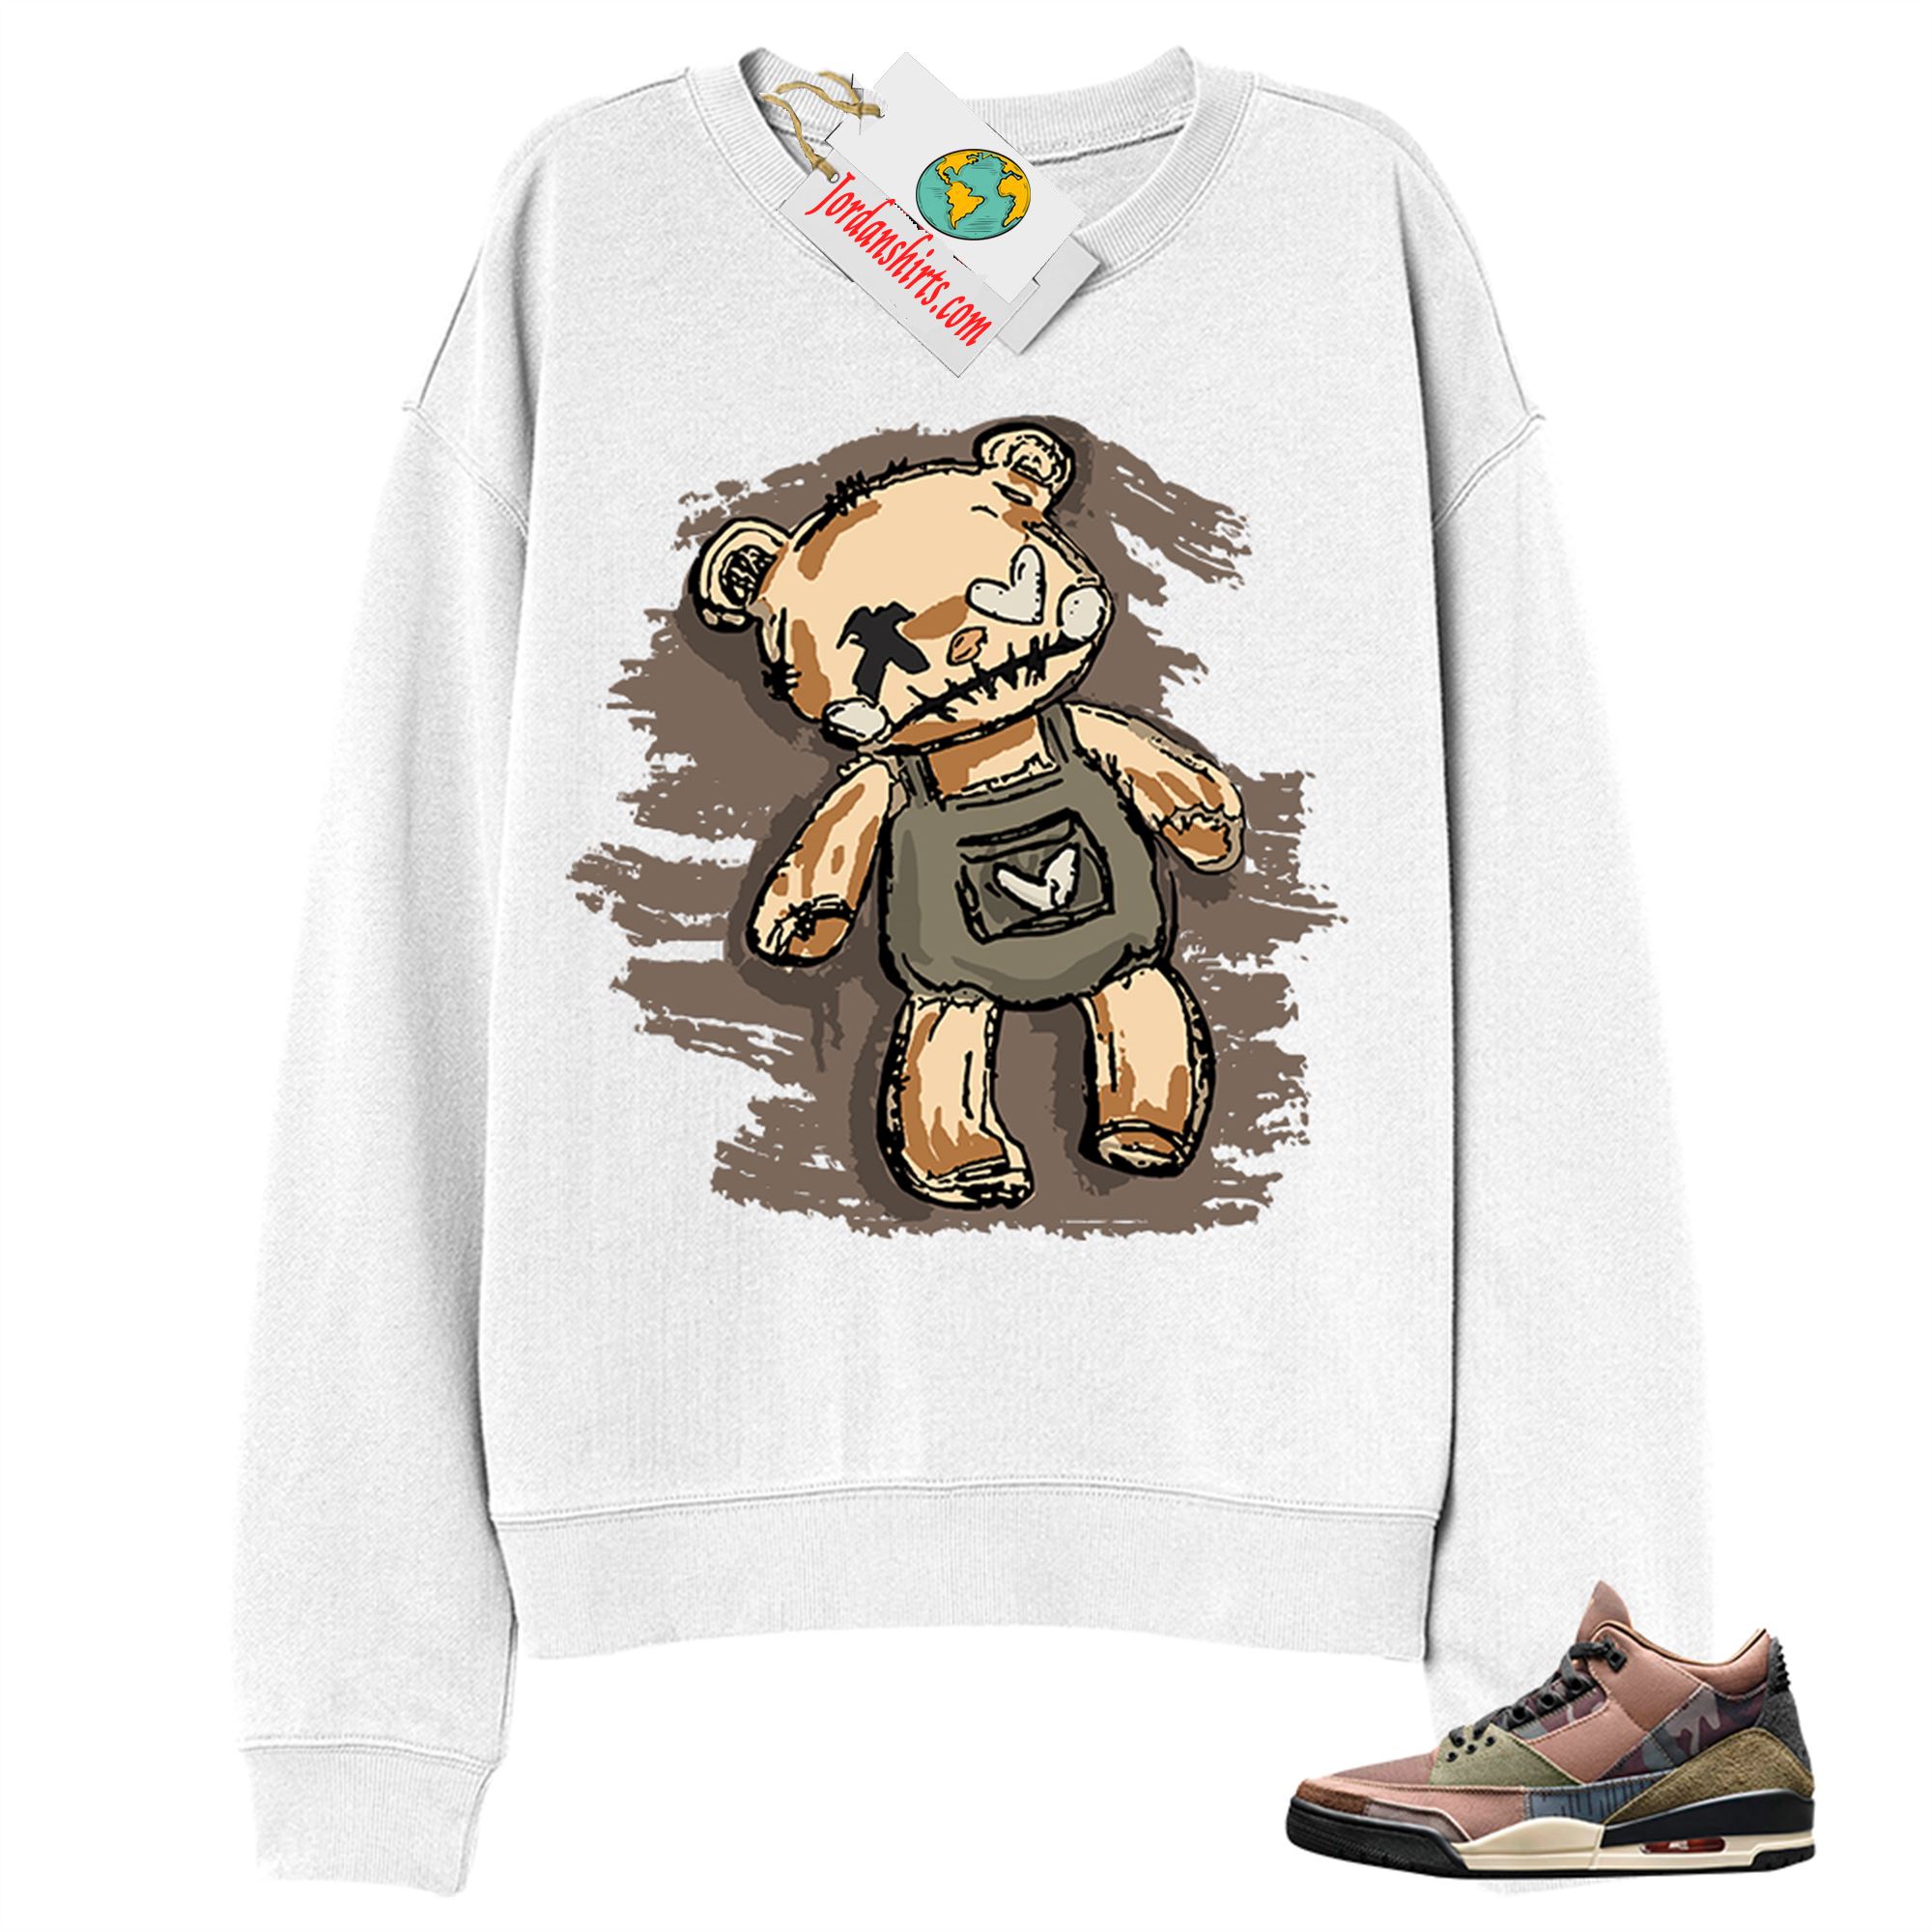 Jordan 3 Sweatshirt, Teddy Bear Broken Heart White Sweatshirt Air Jordan 3 Camo 3s Full Size Up To 5xl